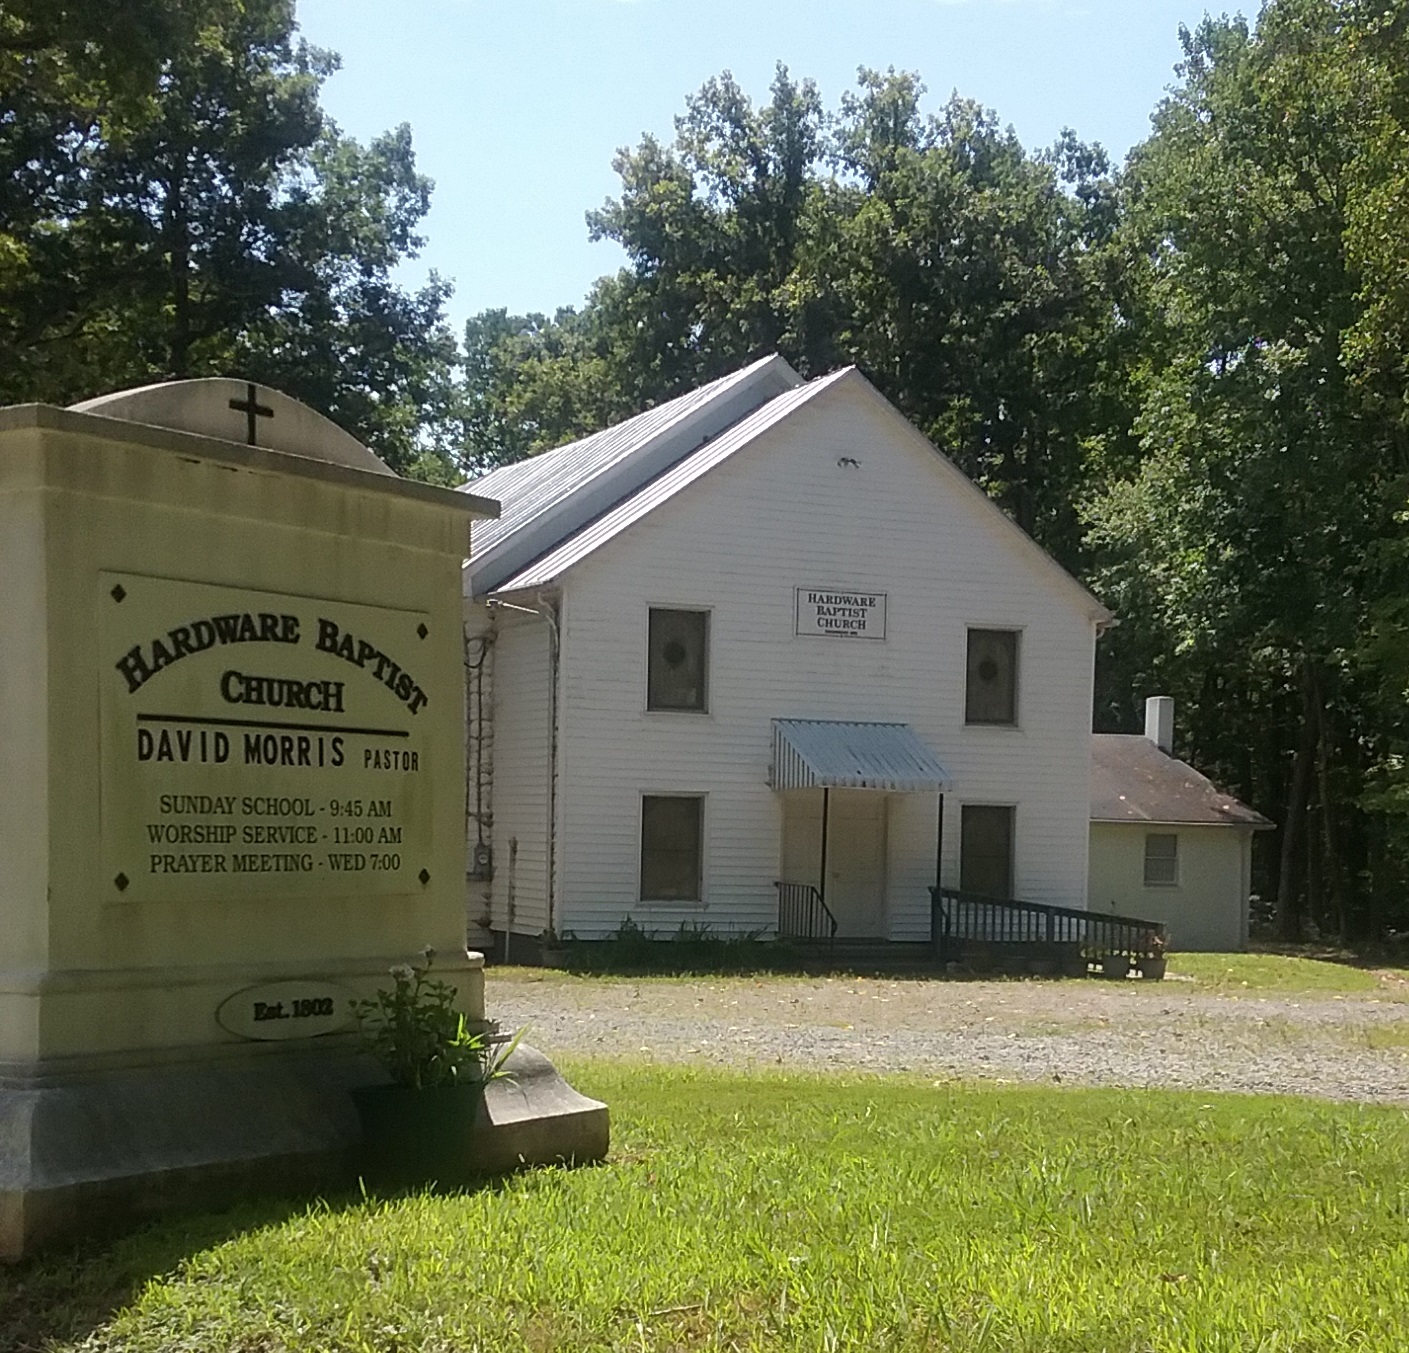 Hardware Baptist Church established in 1802